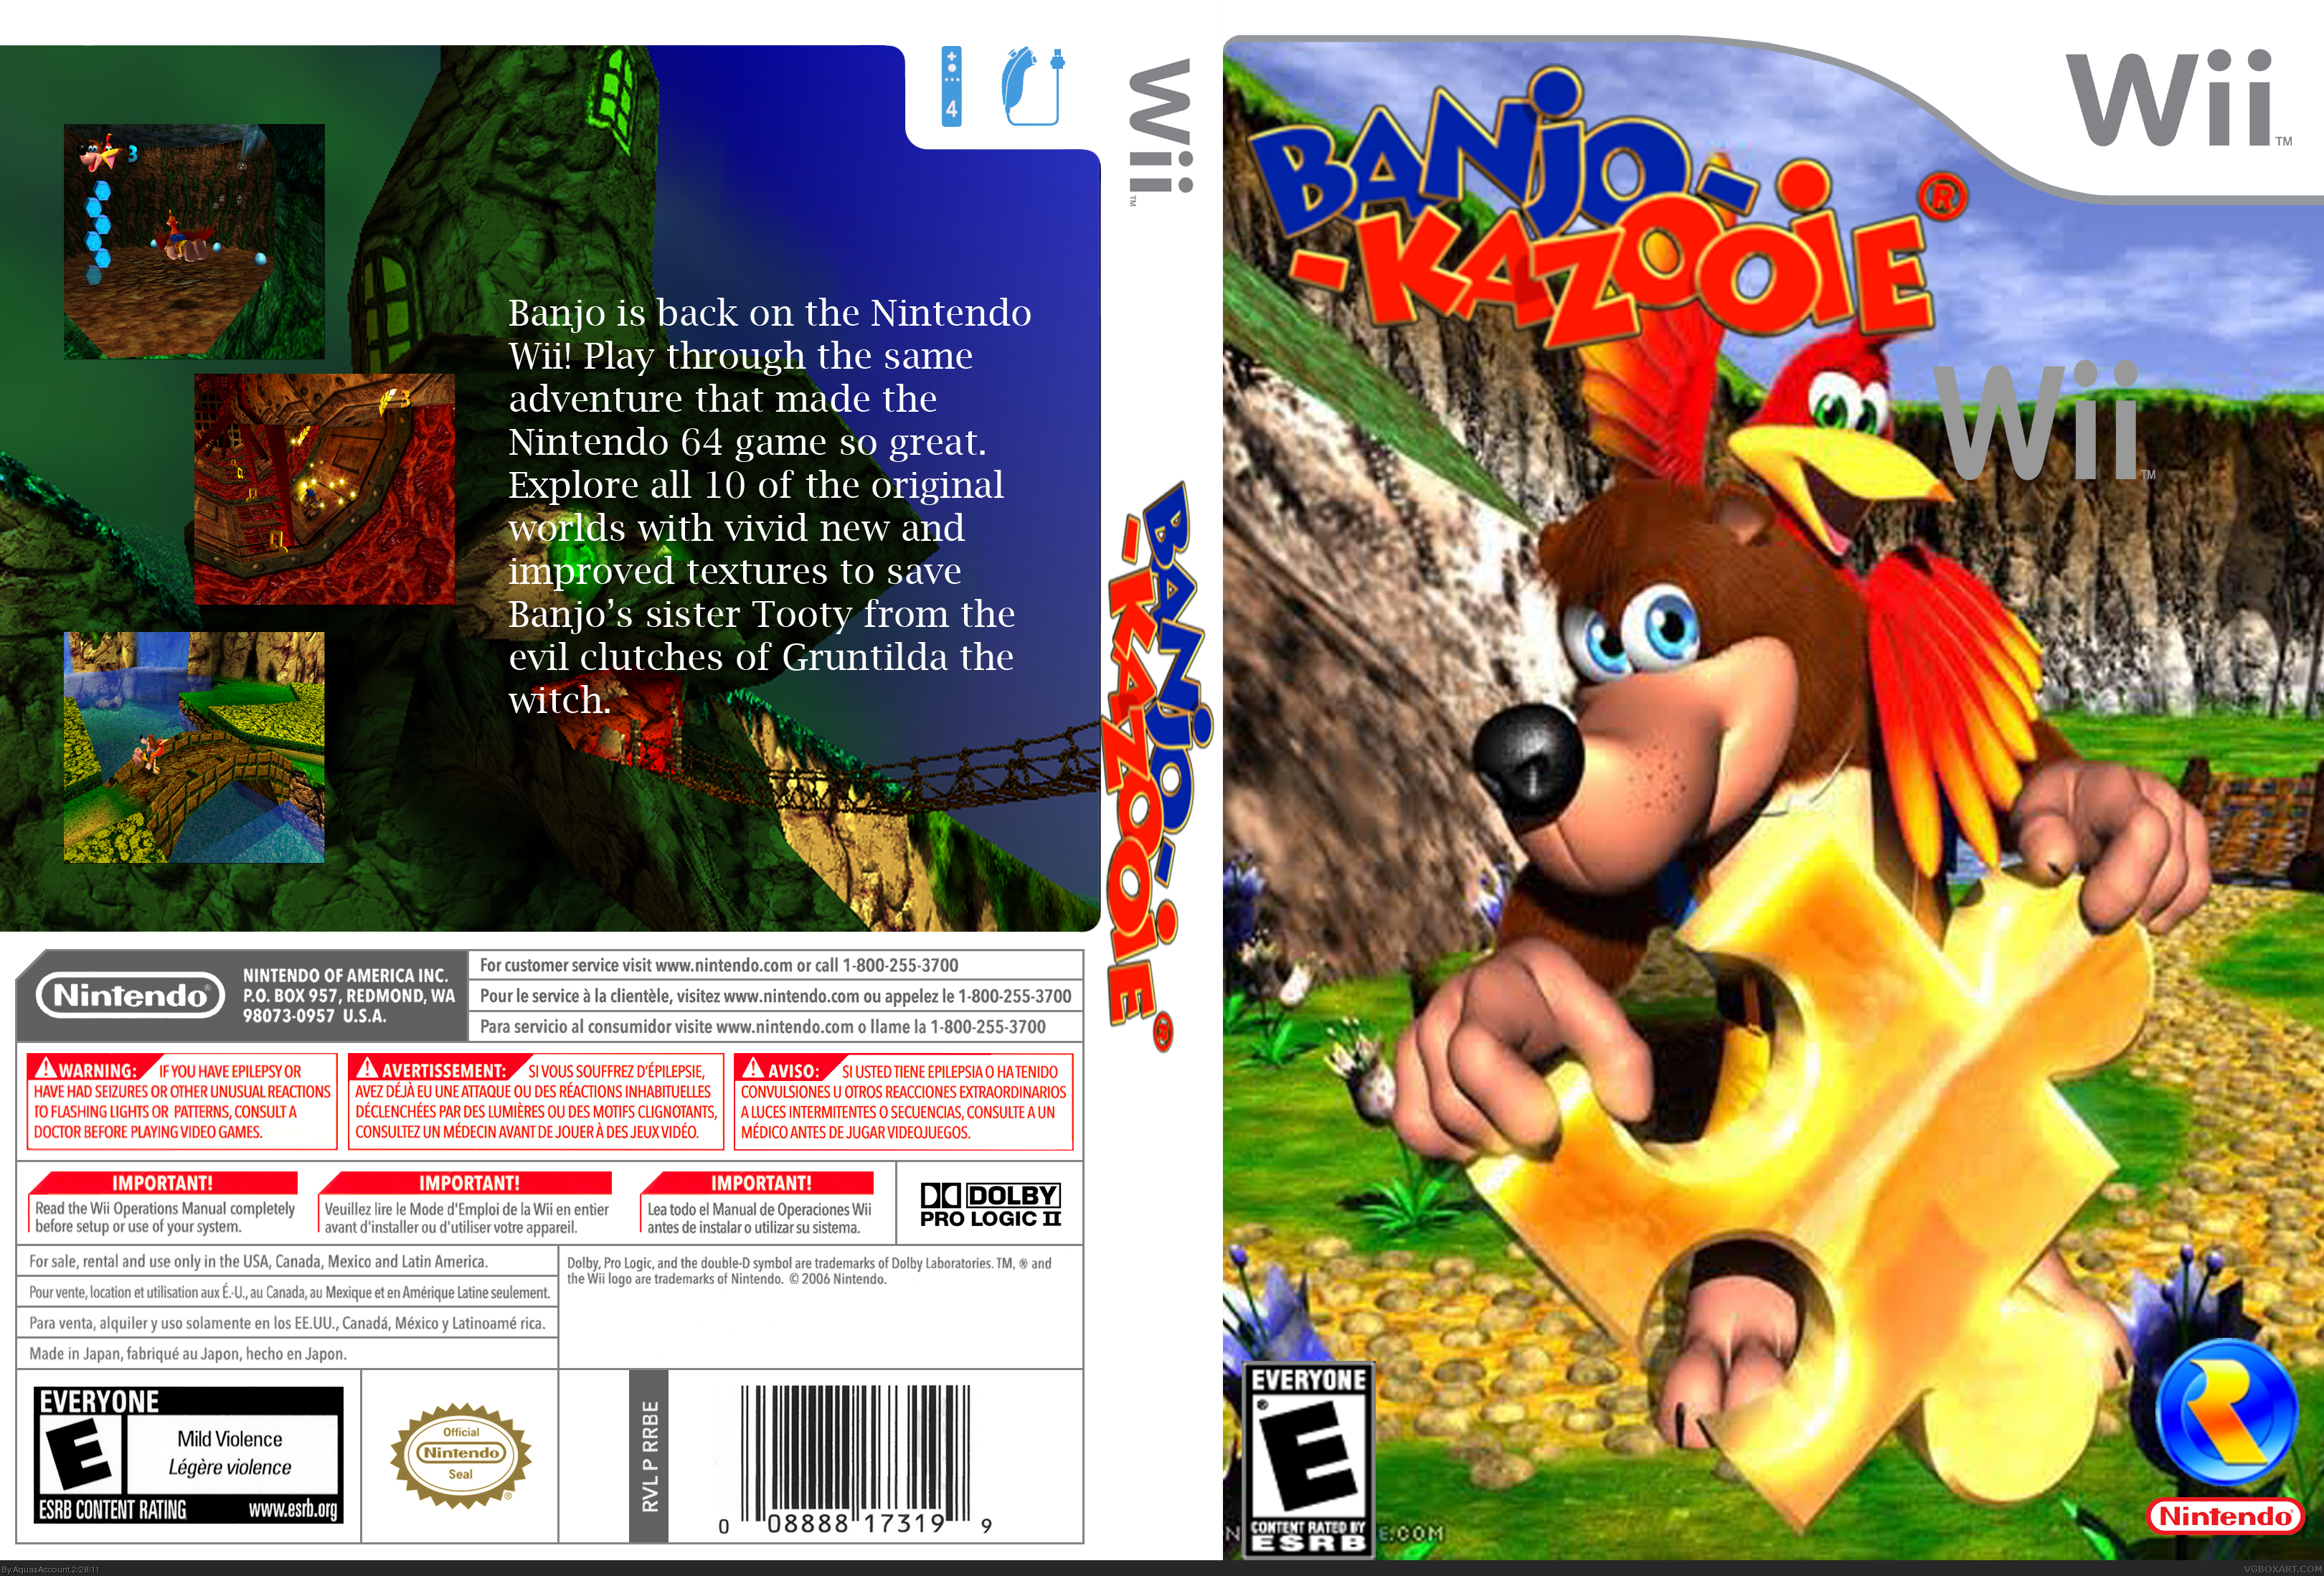 Banjo-Kazooie Wii box cover